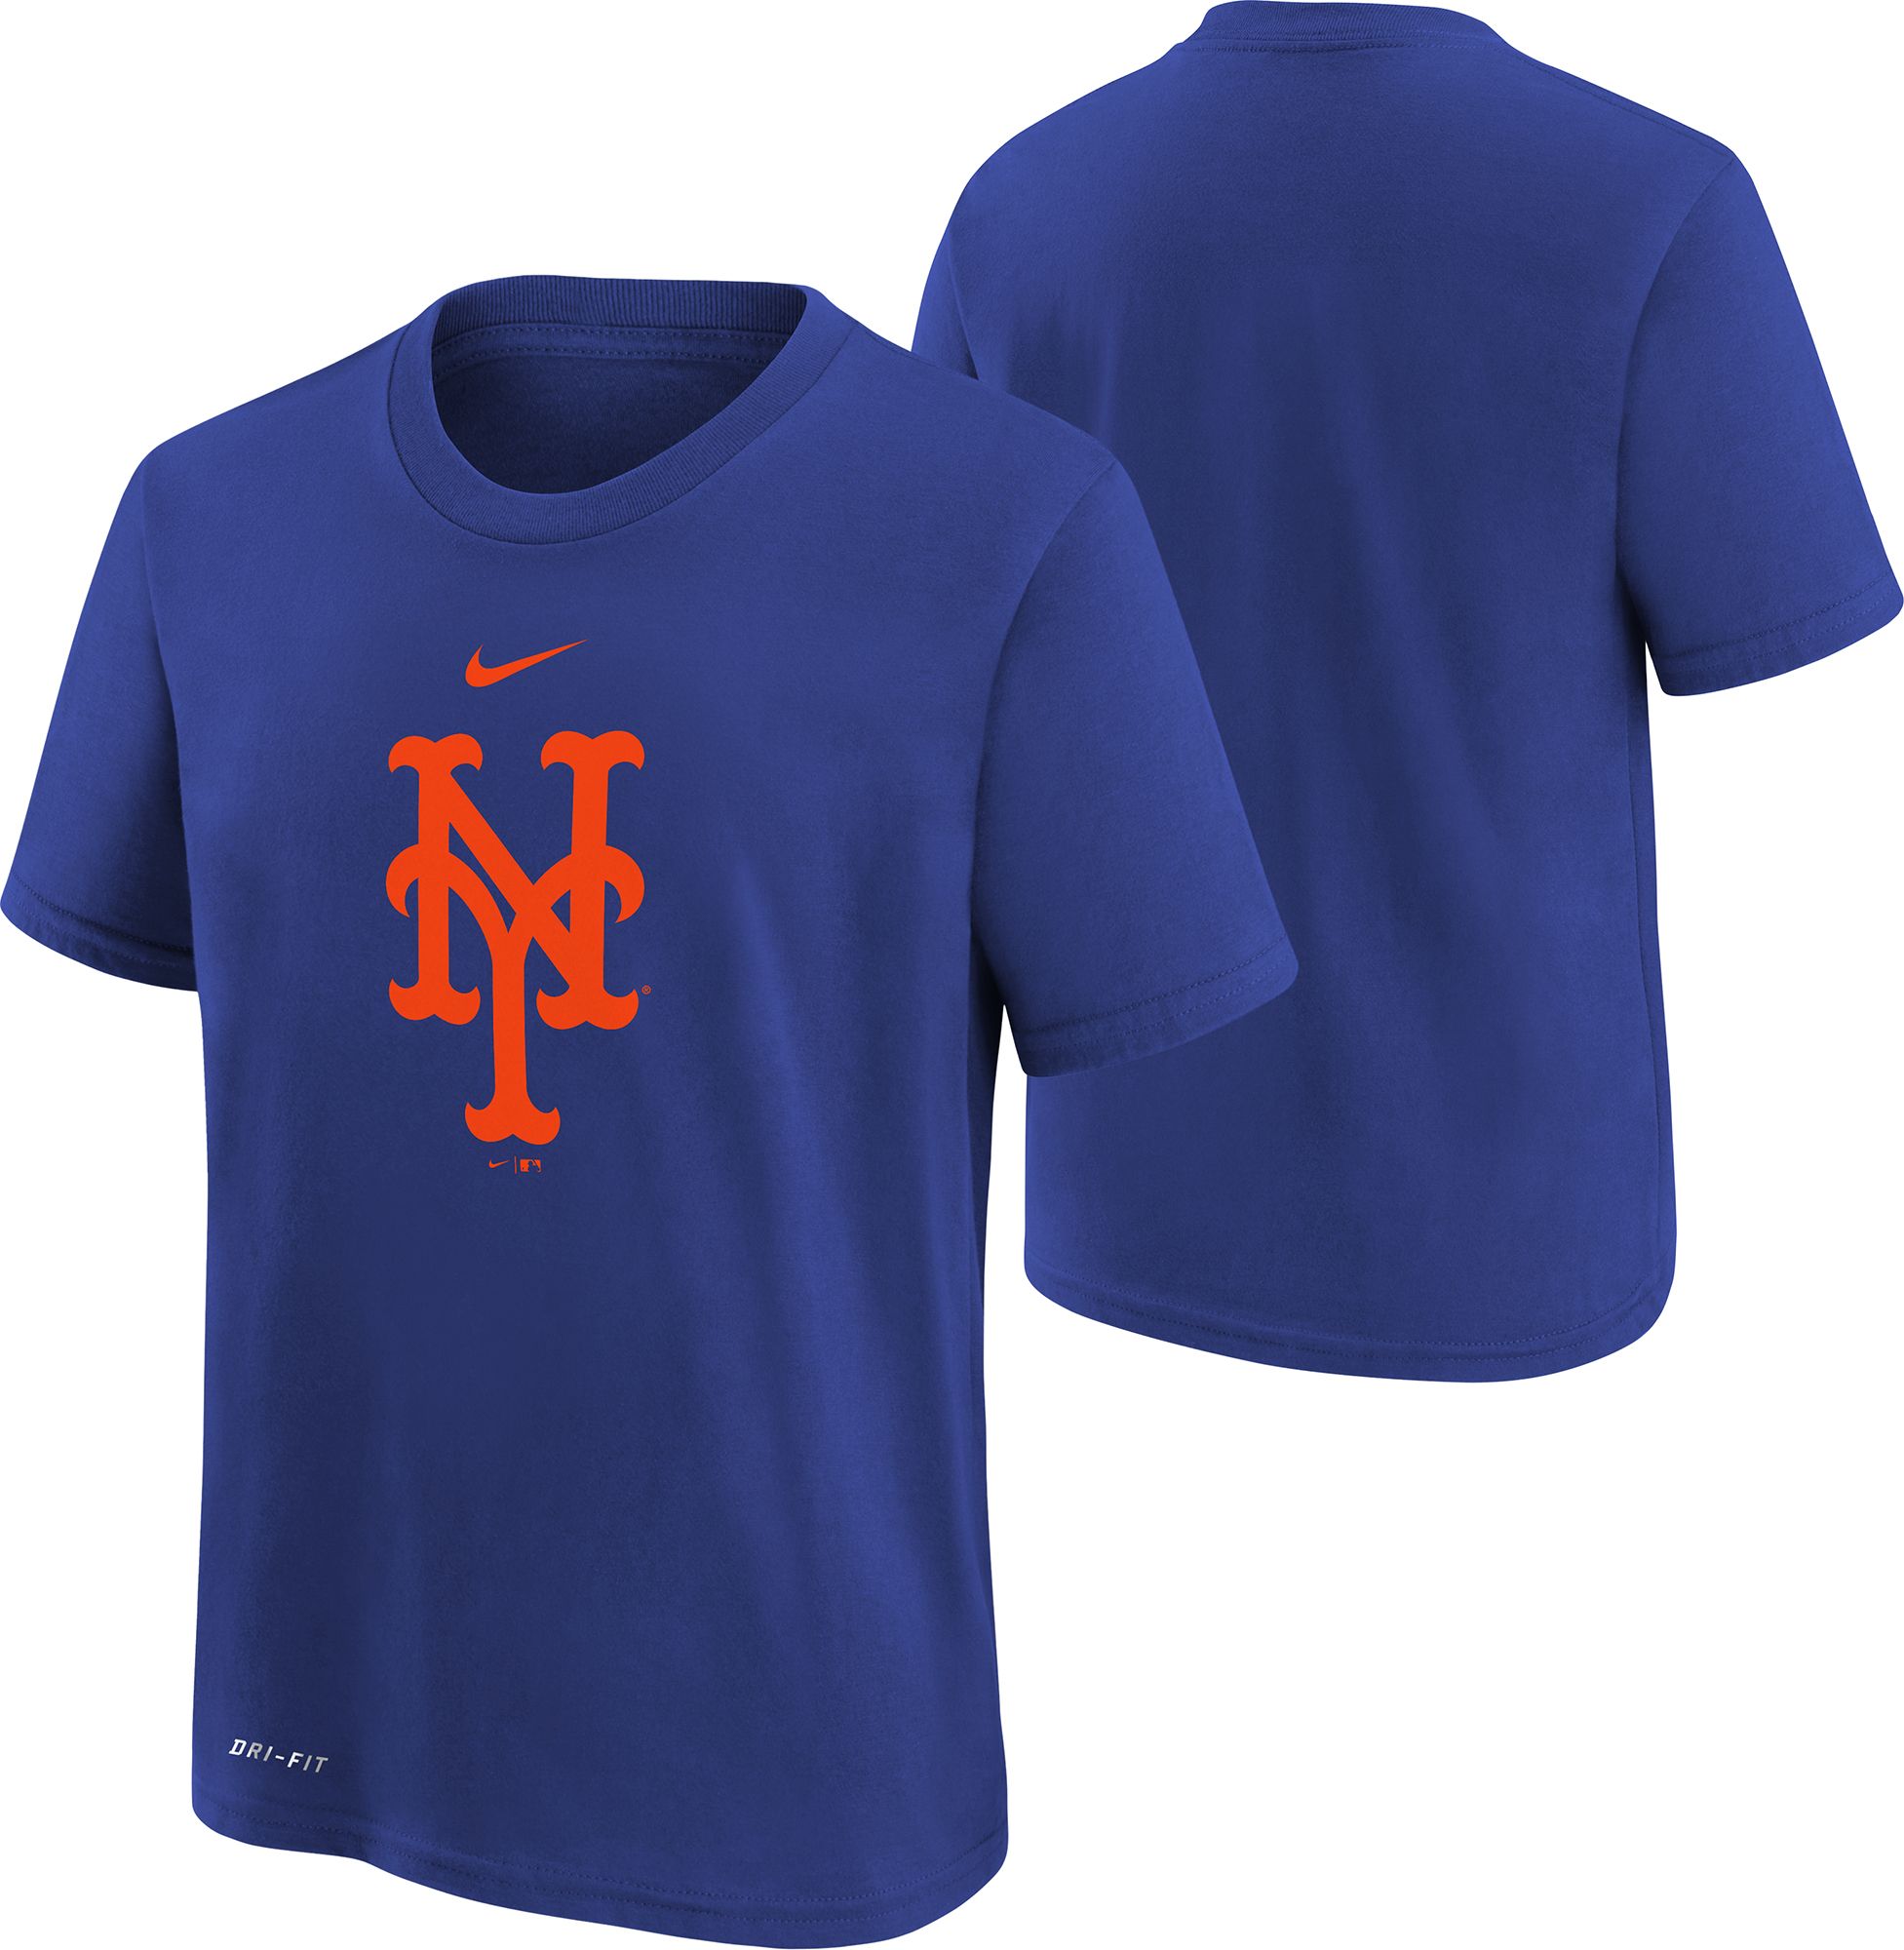 Nike / Youth Boys' New York Mets Blue Logo Legend T-Shirt